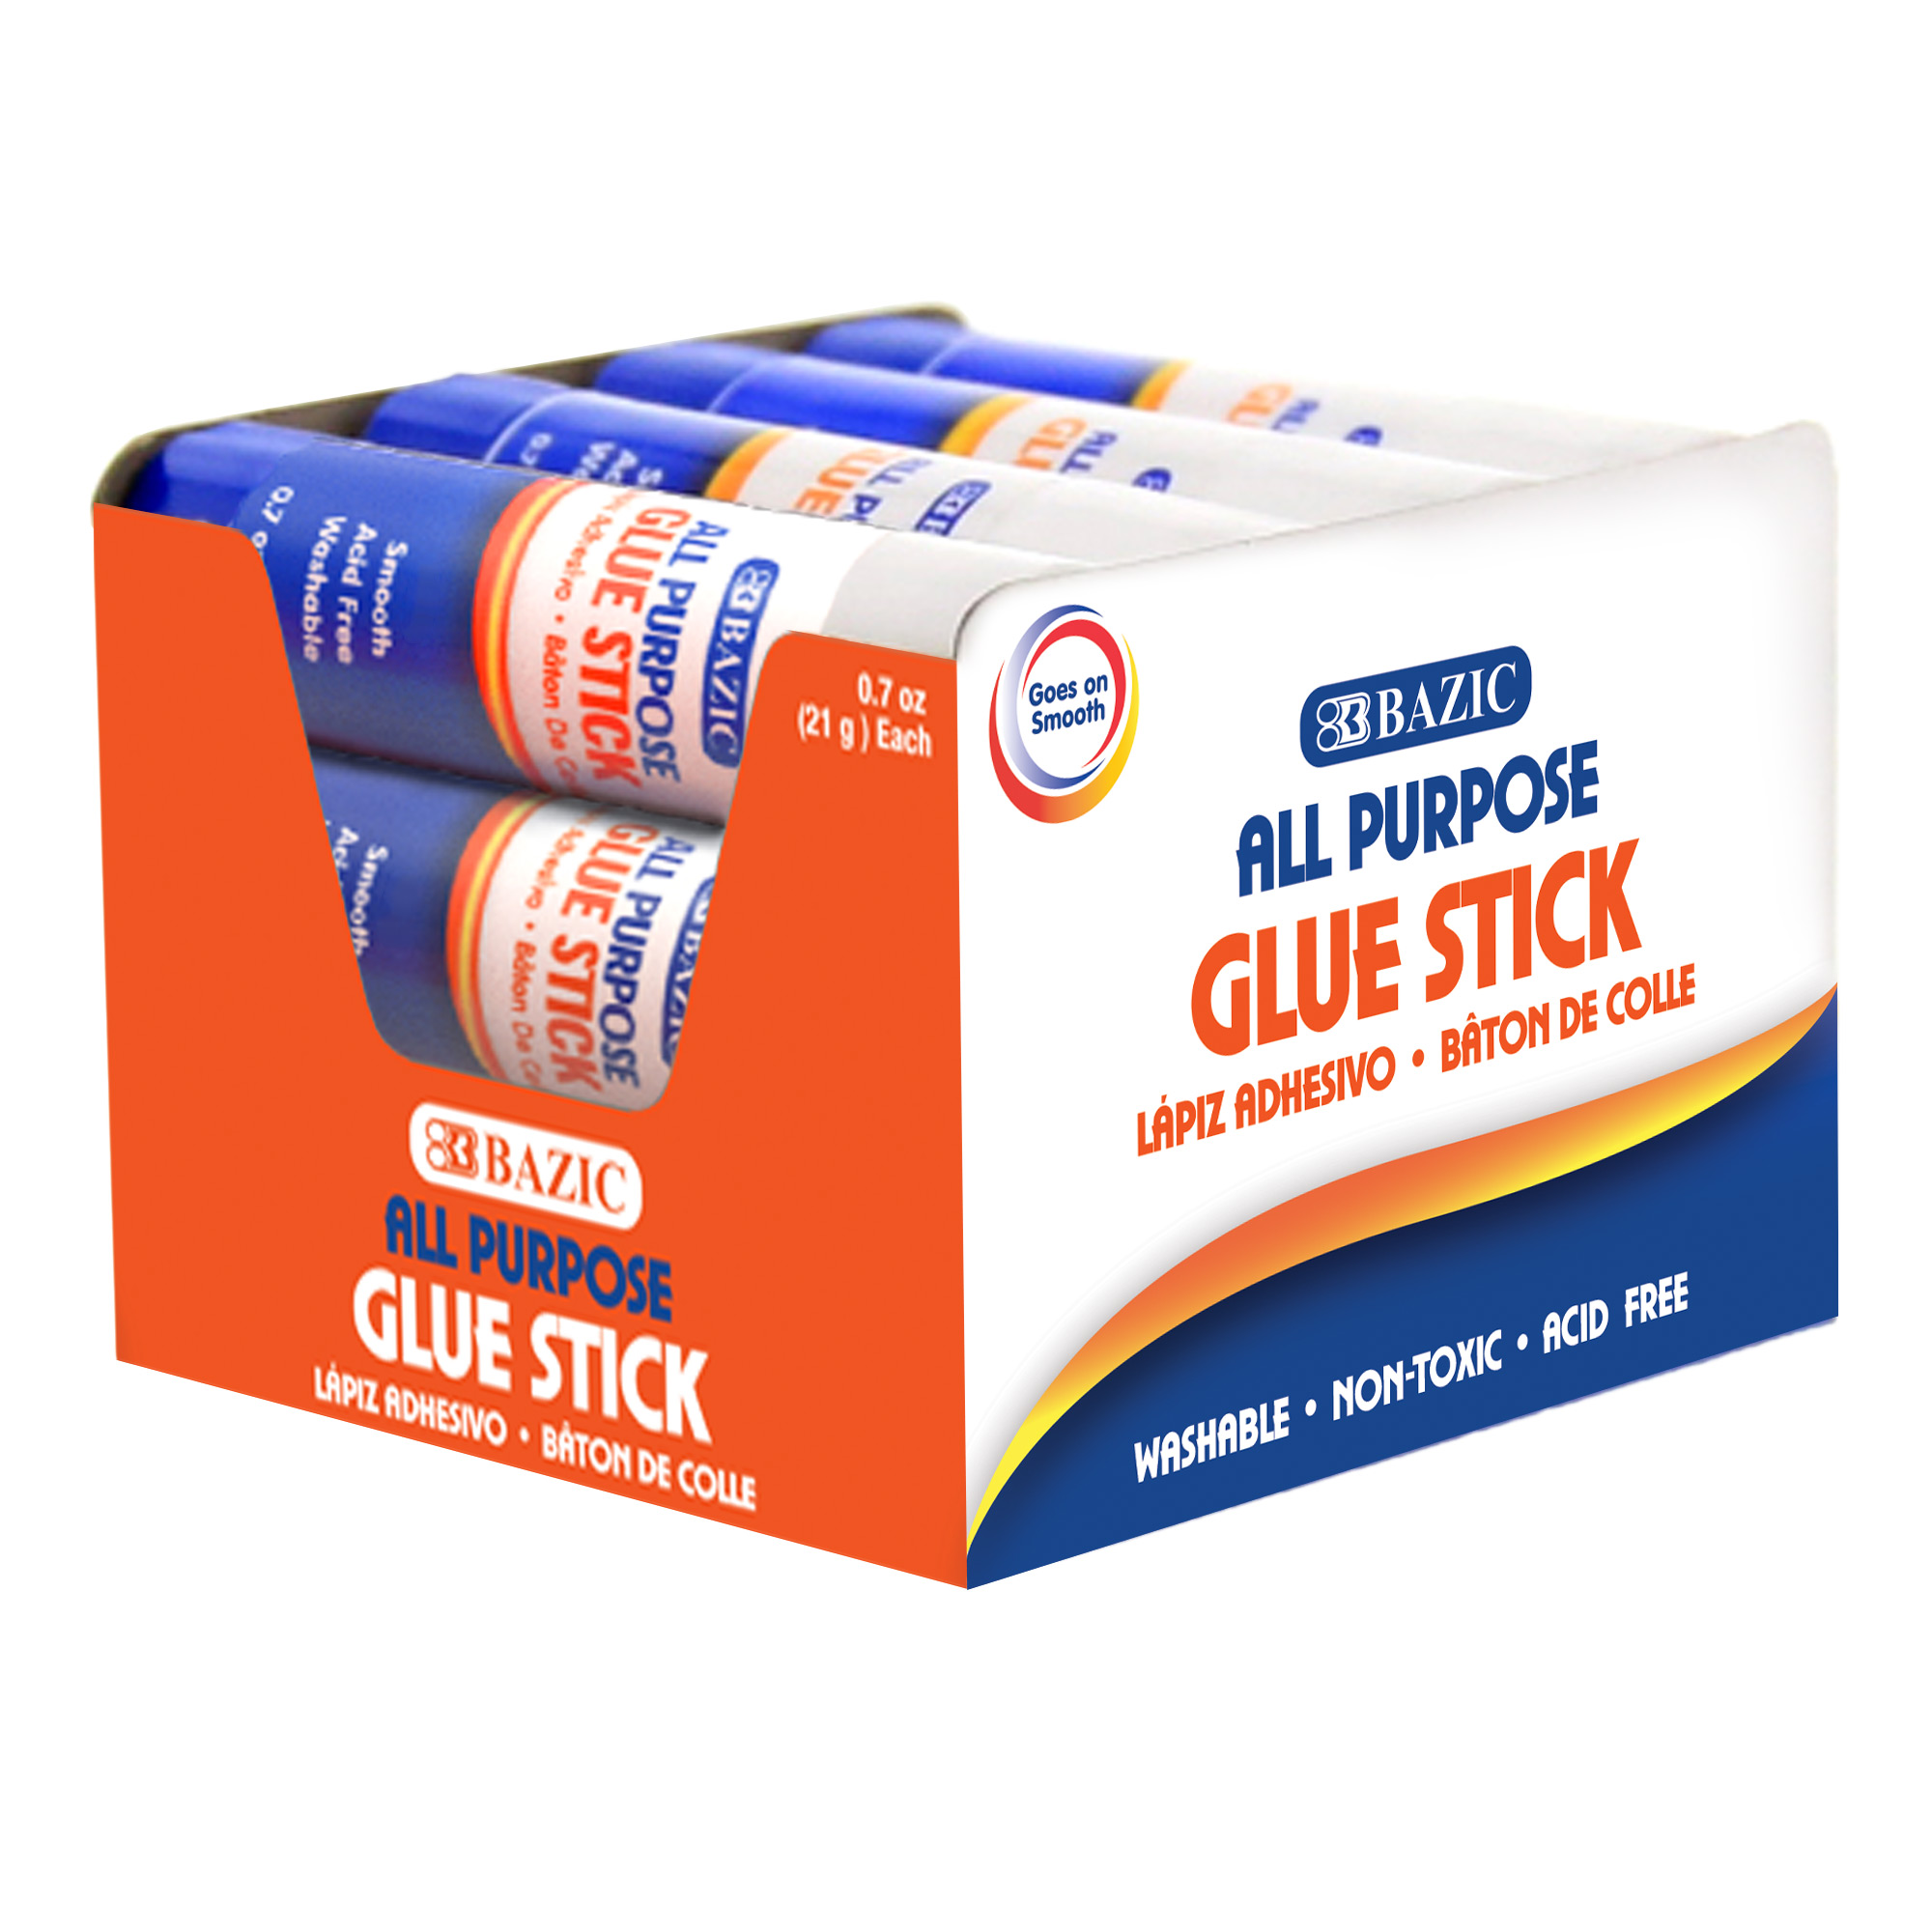 Bazic 36G / 1.27 oz Premium Jumbo Glue Stick